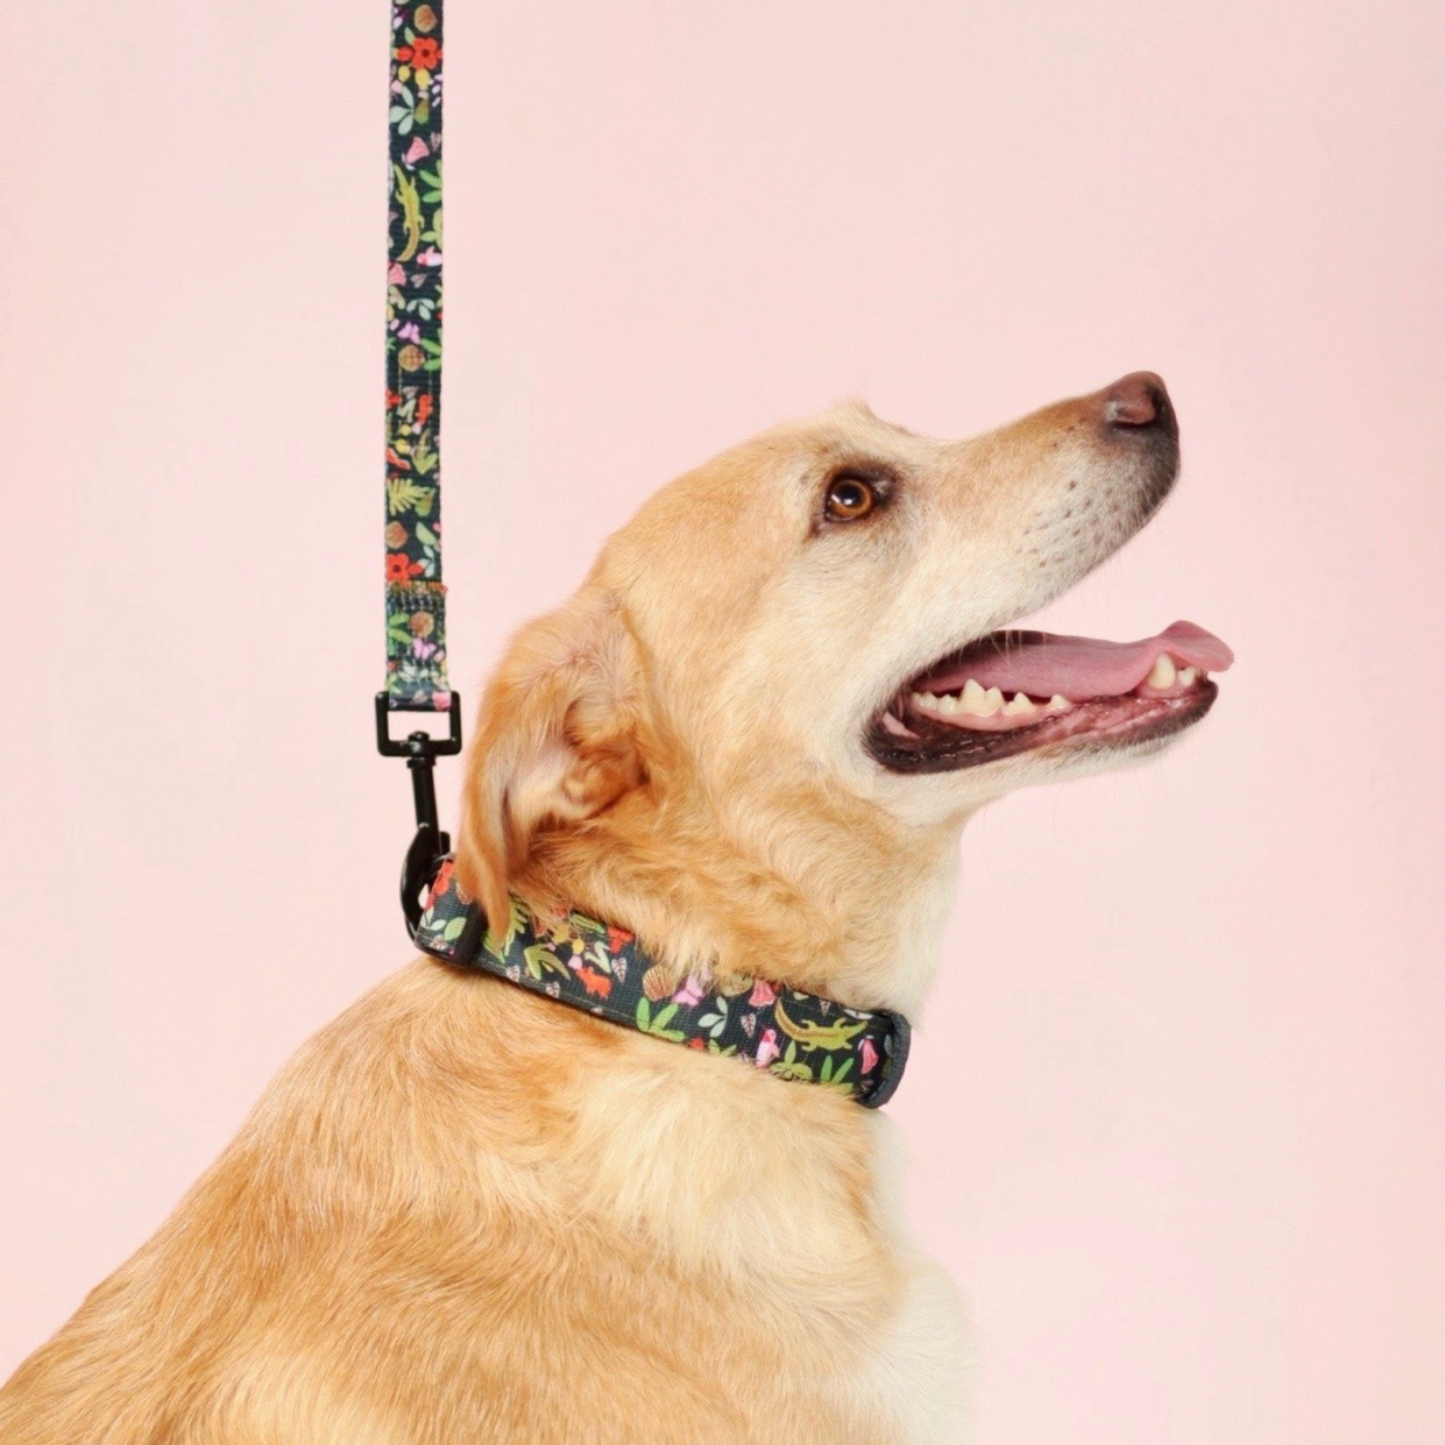 Tokio, rescue dog, wearing Pata Paw x Holalola leash and collar